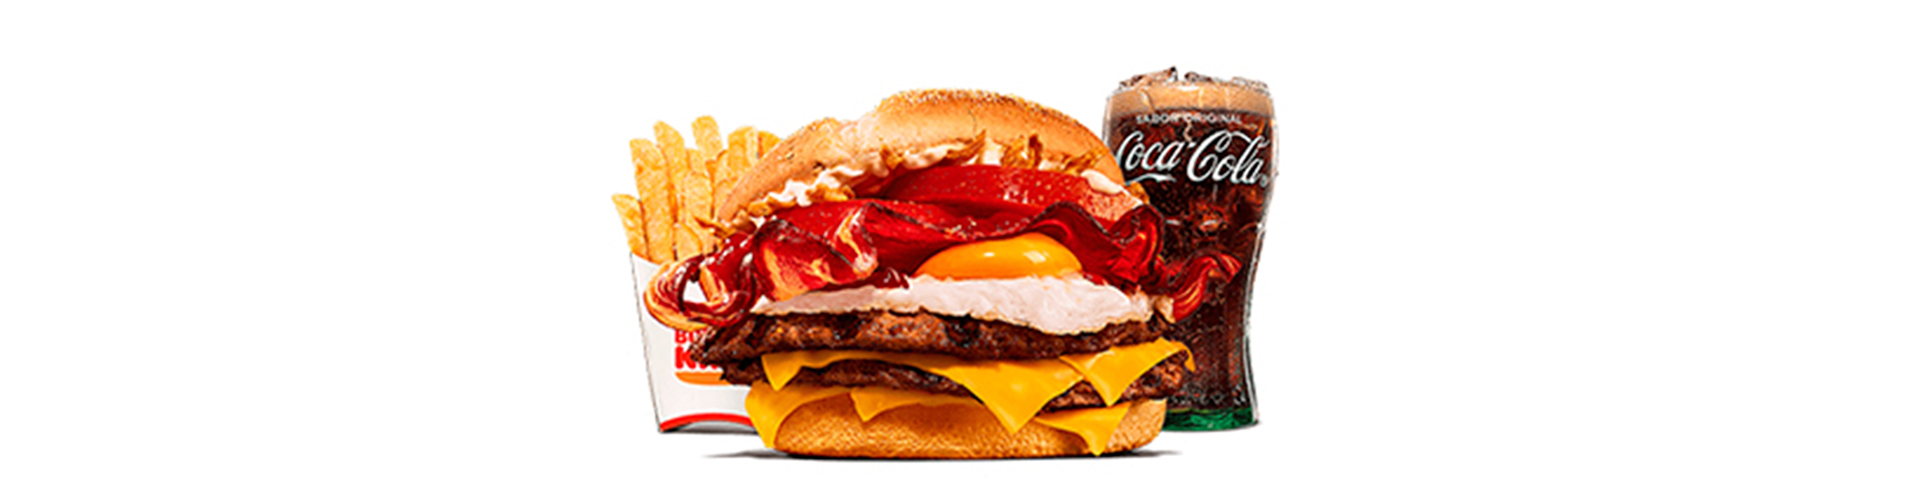 burgerking-40002126-sprite-ensalada